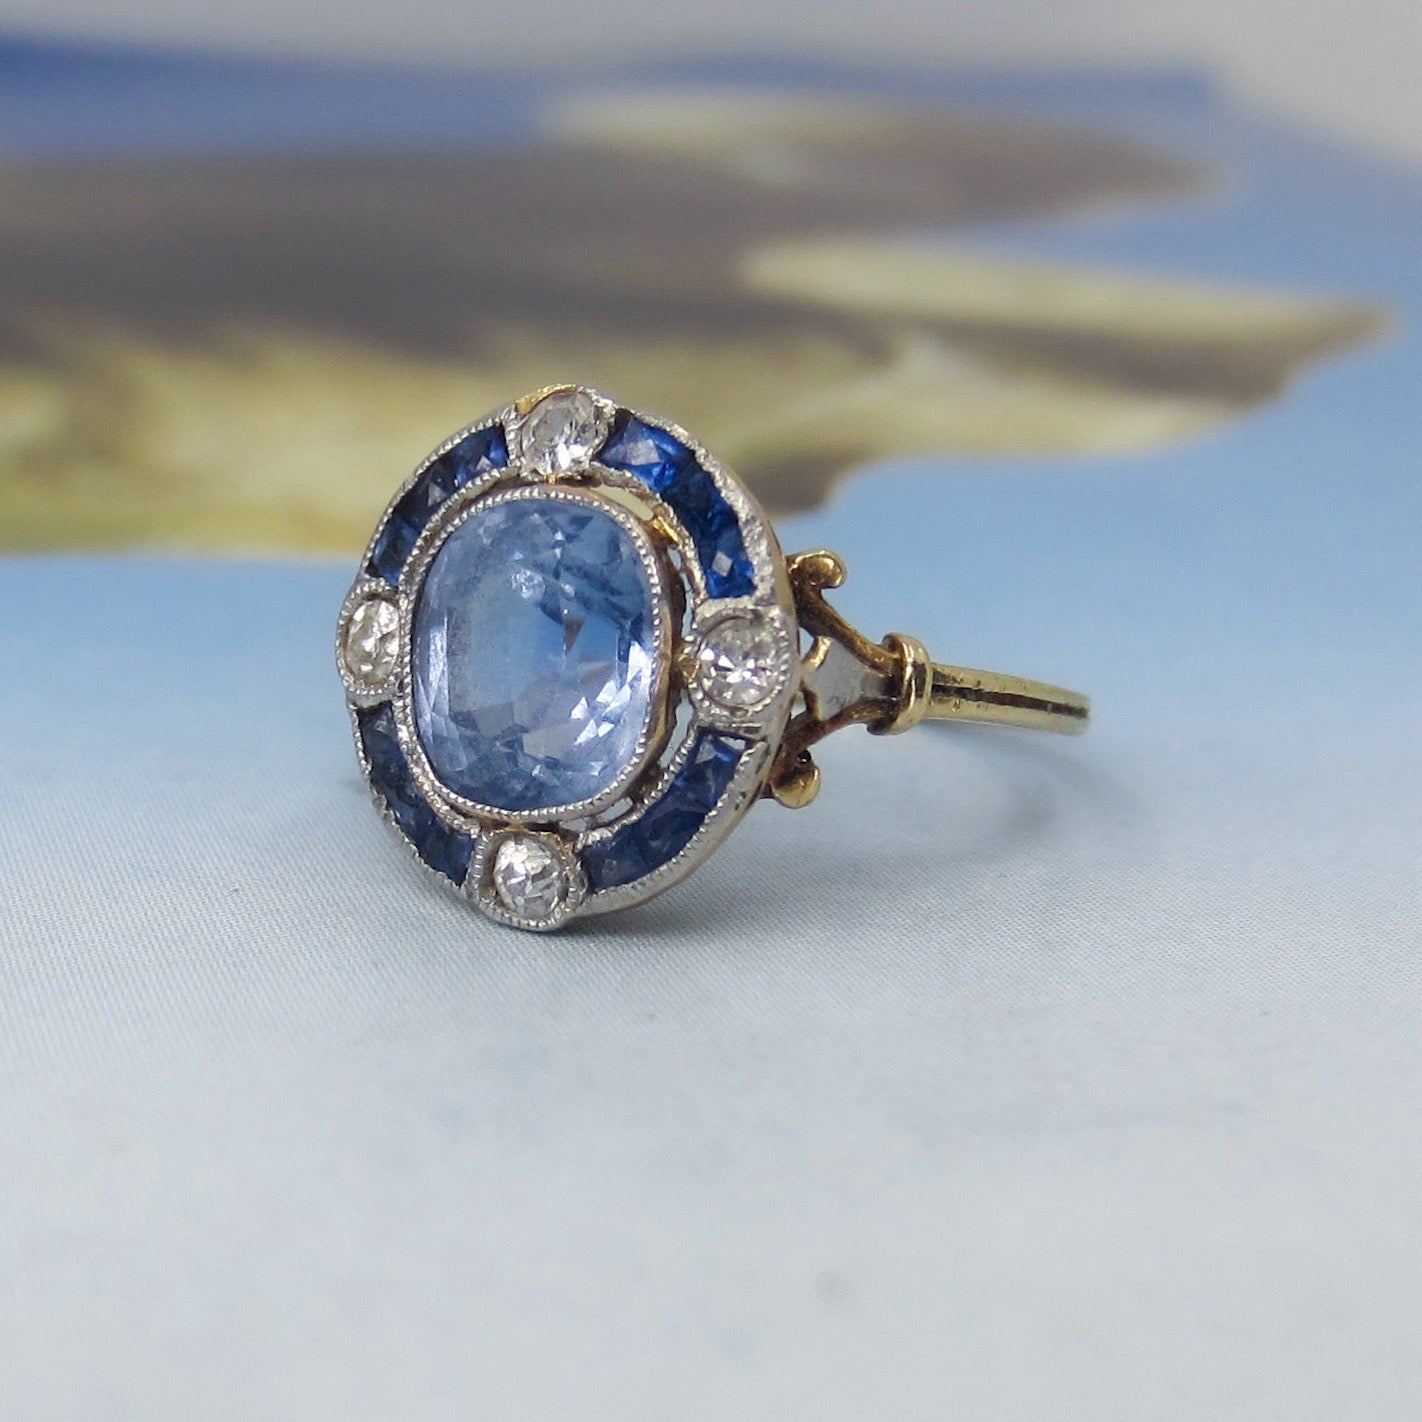 SOLD--Edwardian Sapphire and Diamond Ring Platinum/18k c. 1910